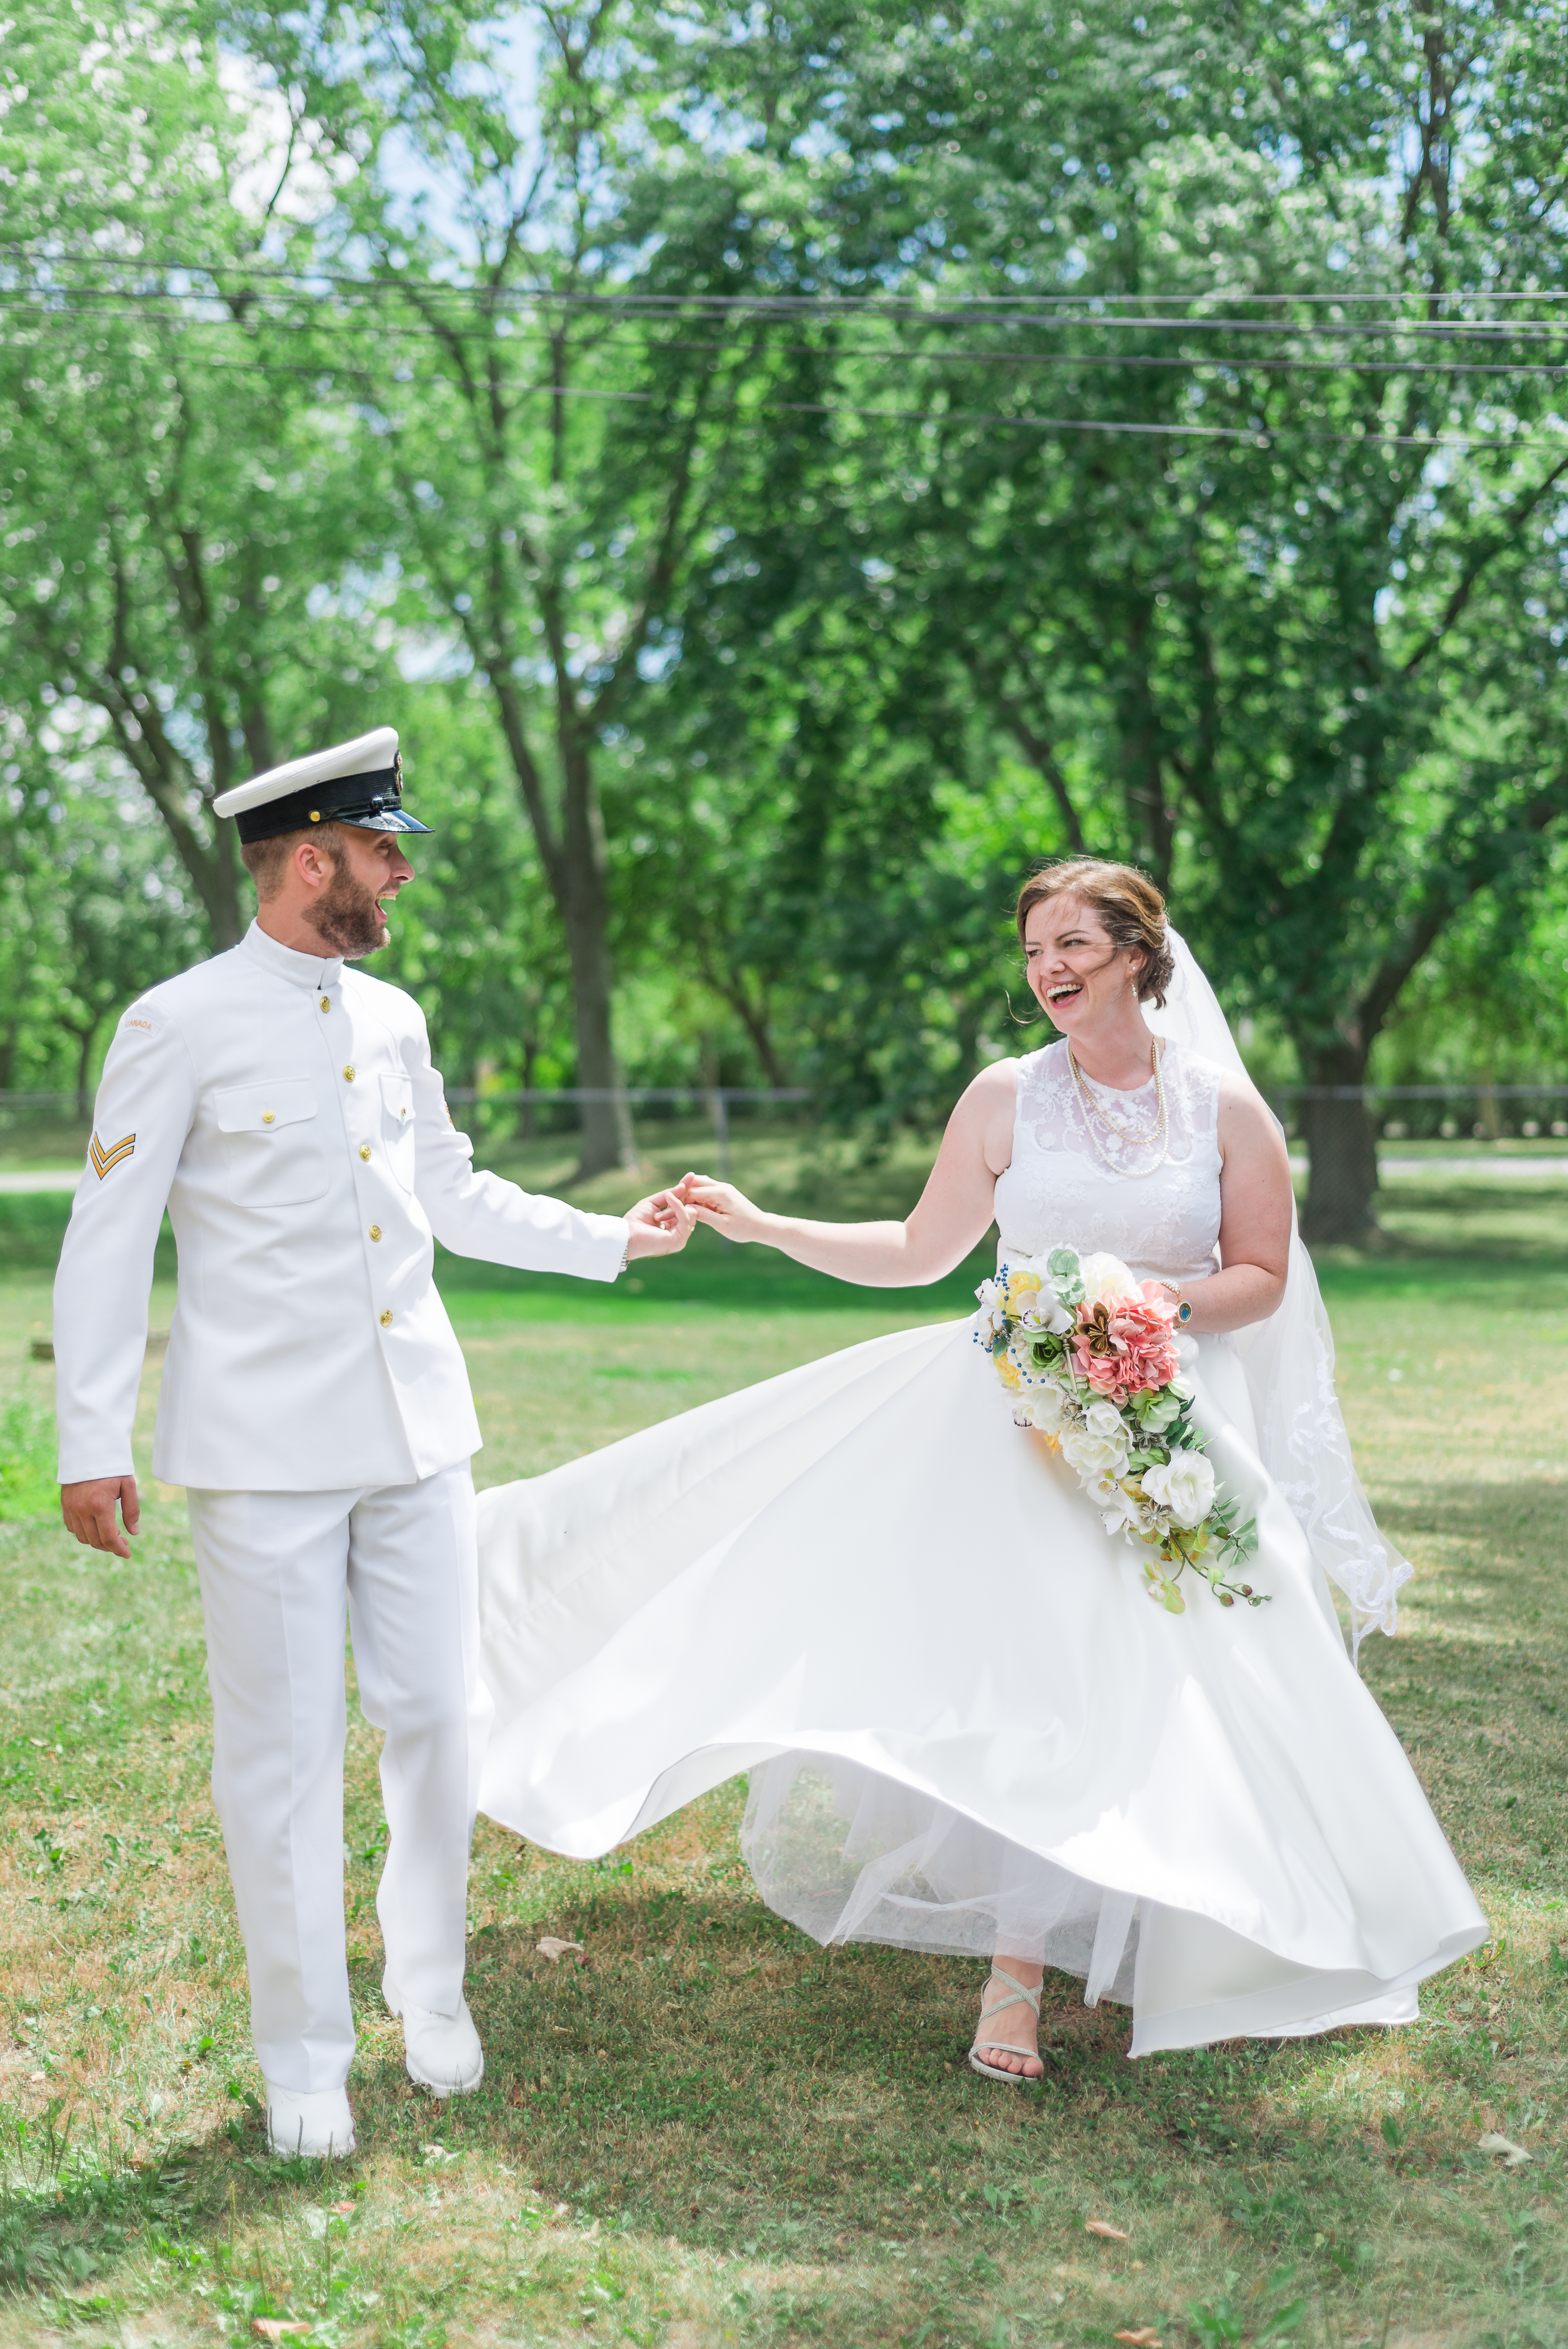 navy whites groom spins bride in field